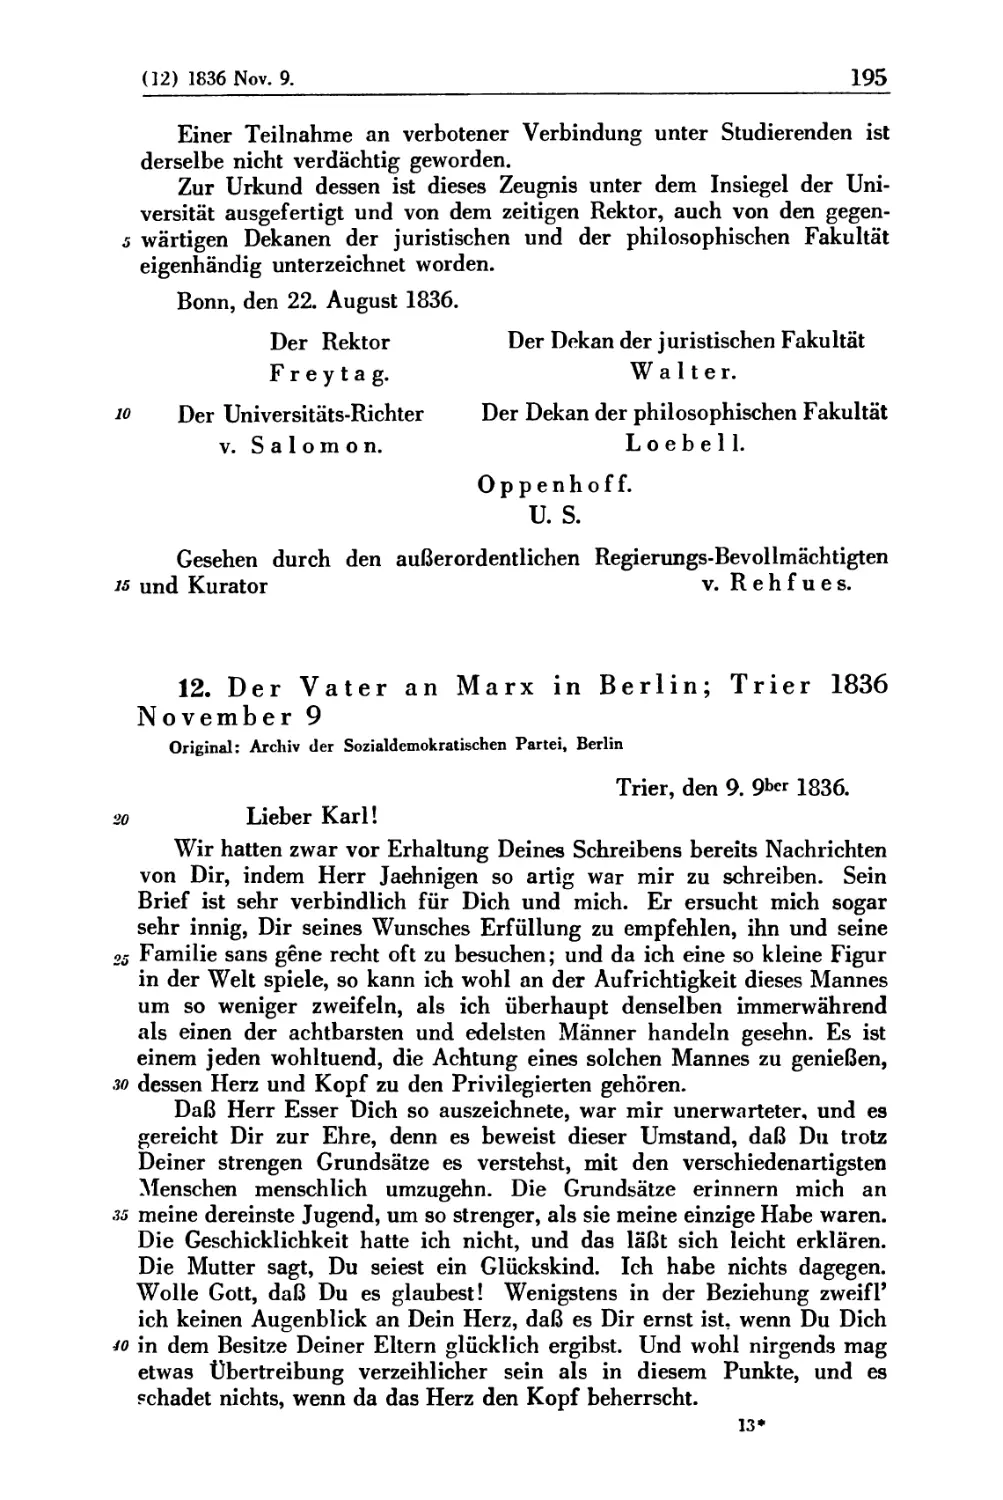 12. Der Vater an Marx in Berlin; Trier 1836 November 9